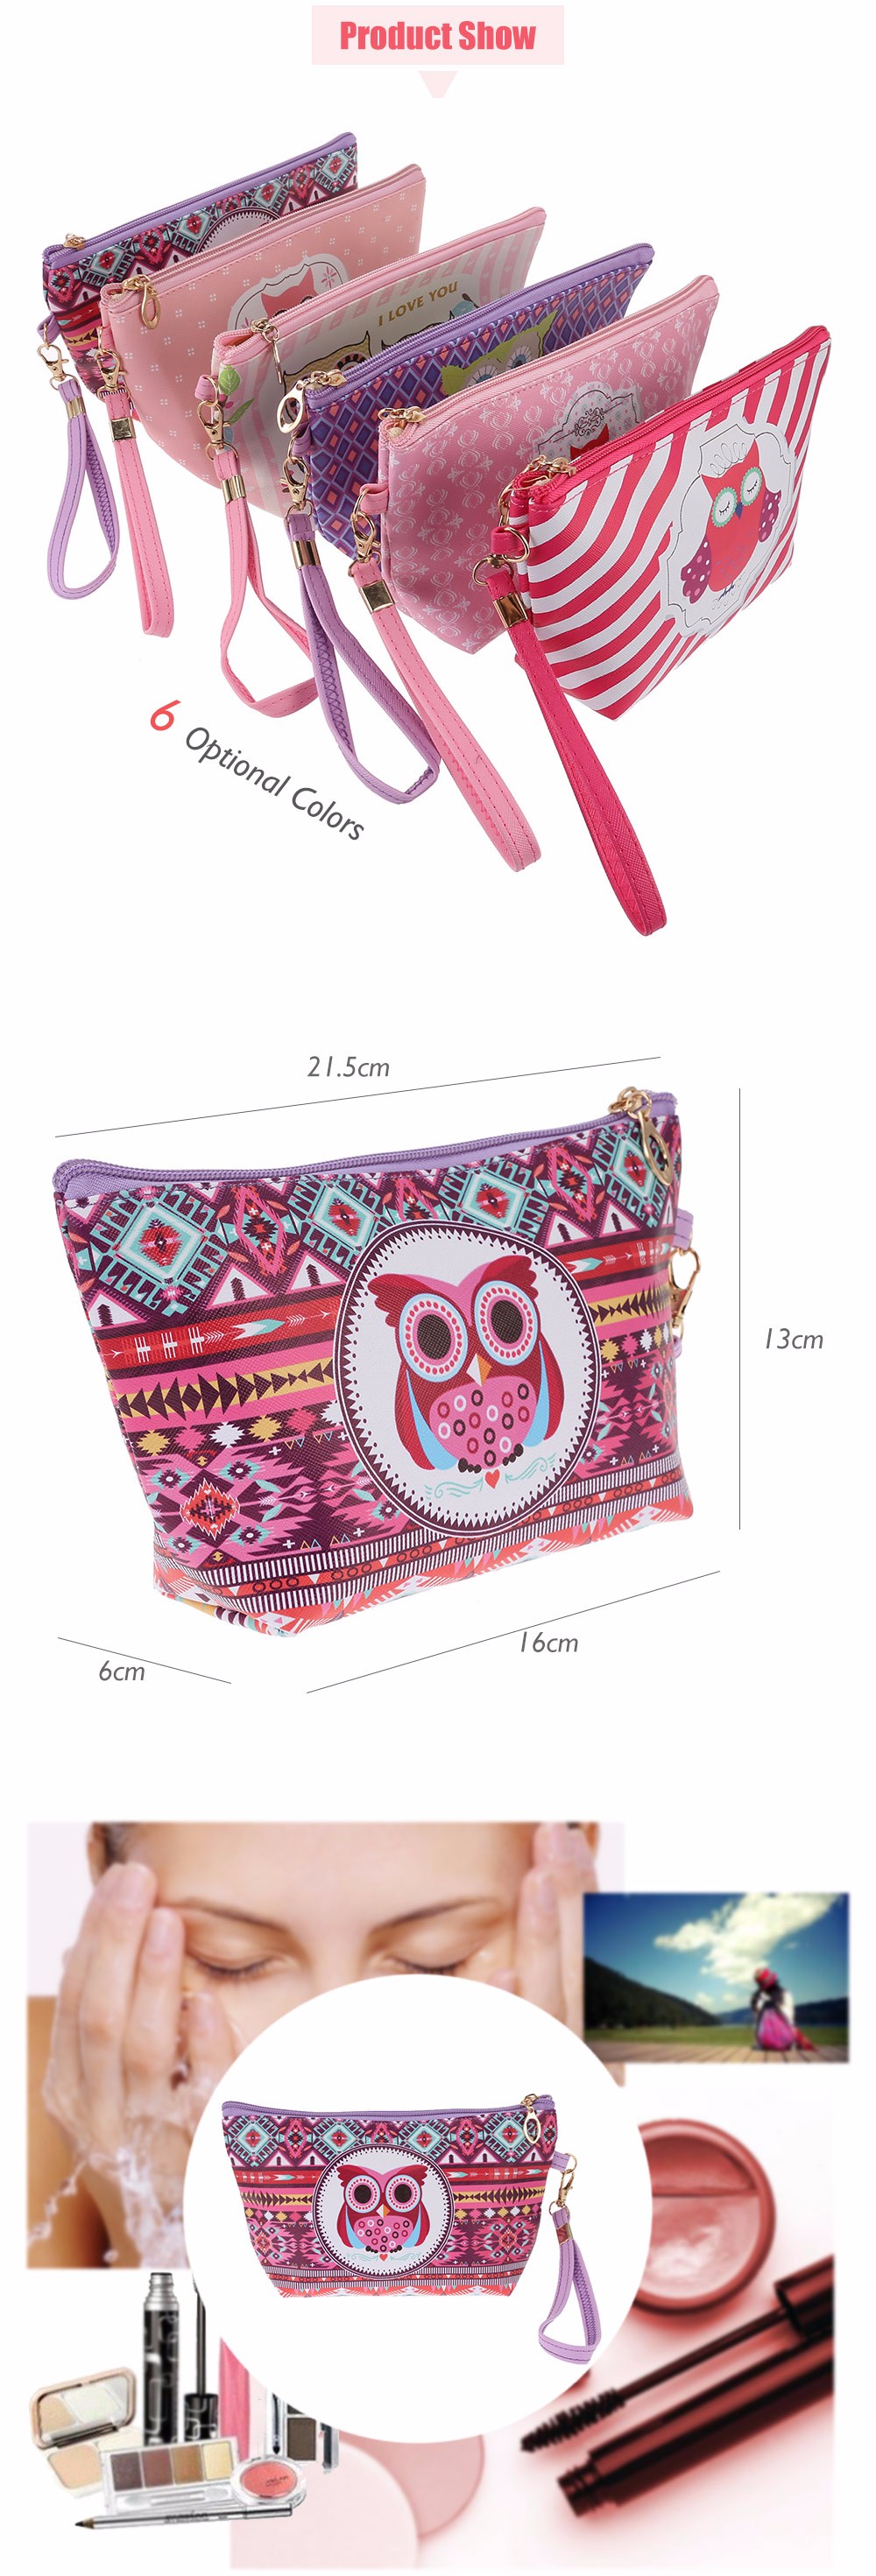 Waterproof Zipper Cartoon Owl Cosmetic Bag Makeup Pouch